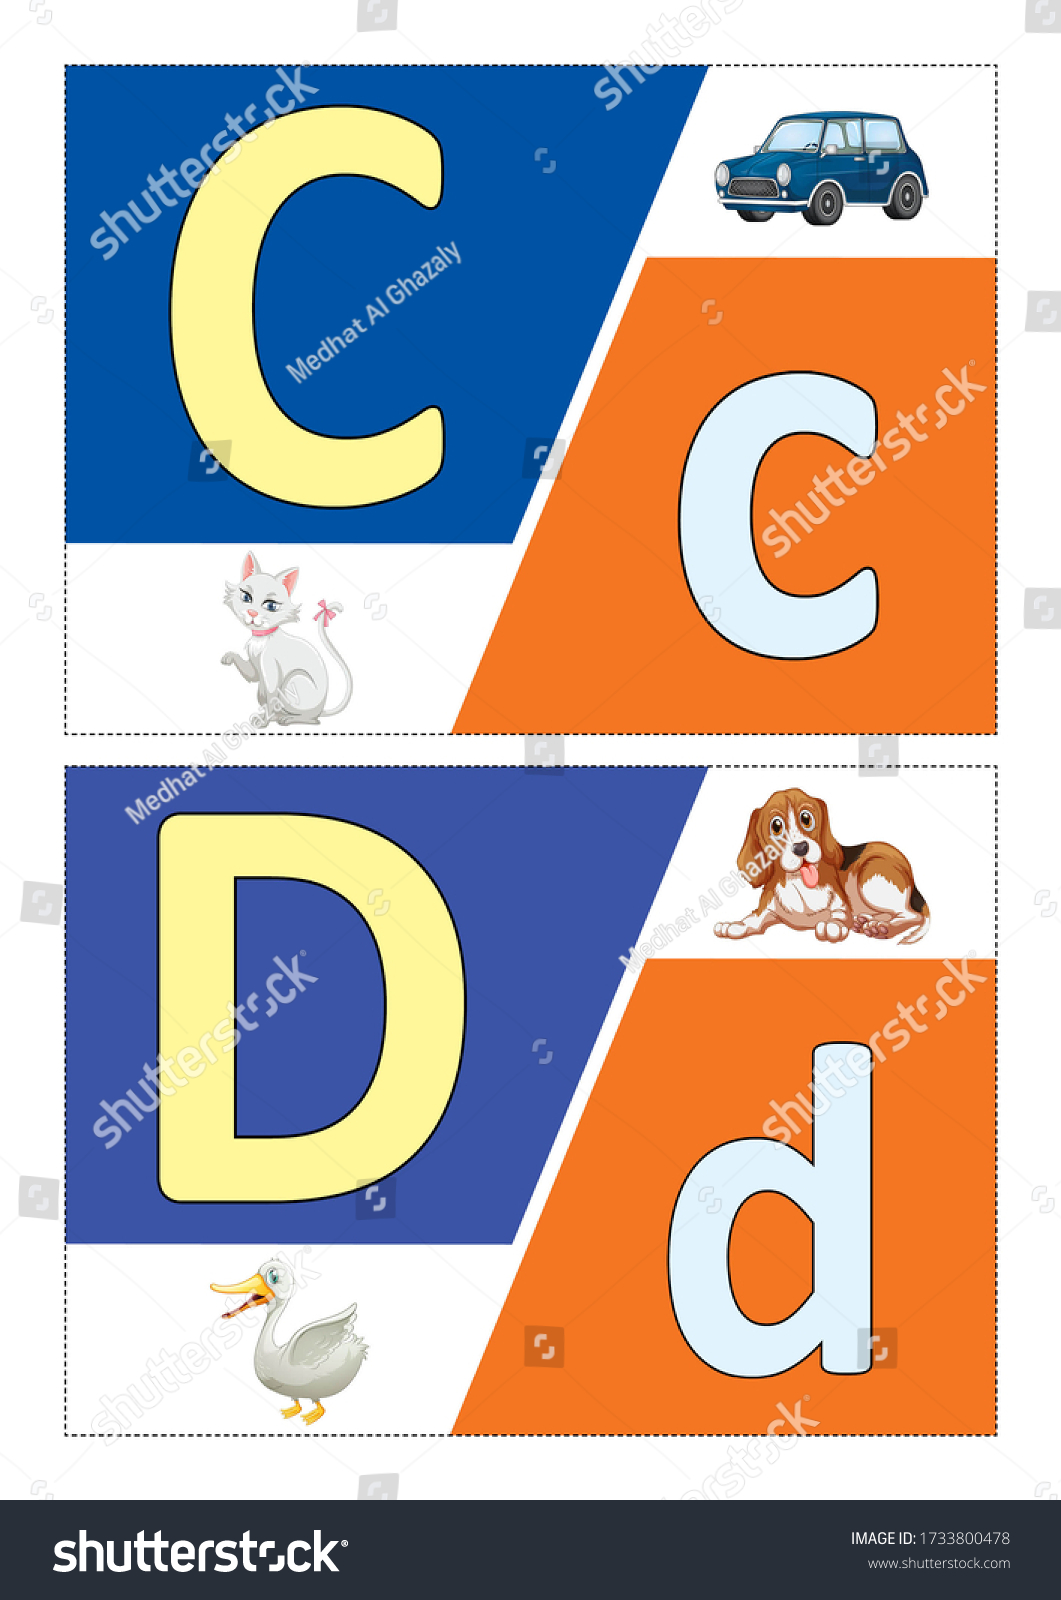 alphabet-printable-flashcards-preschool-kindergarten-stock-illustration-1733800478-shutterstock